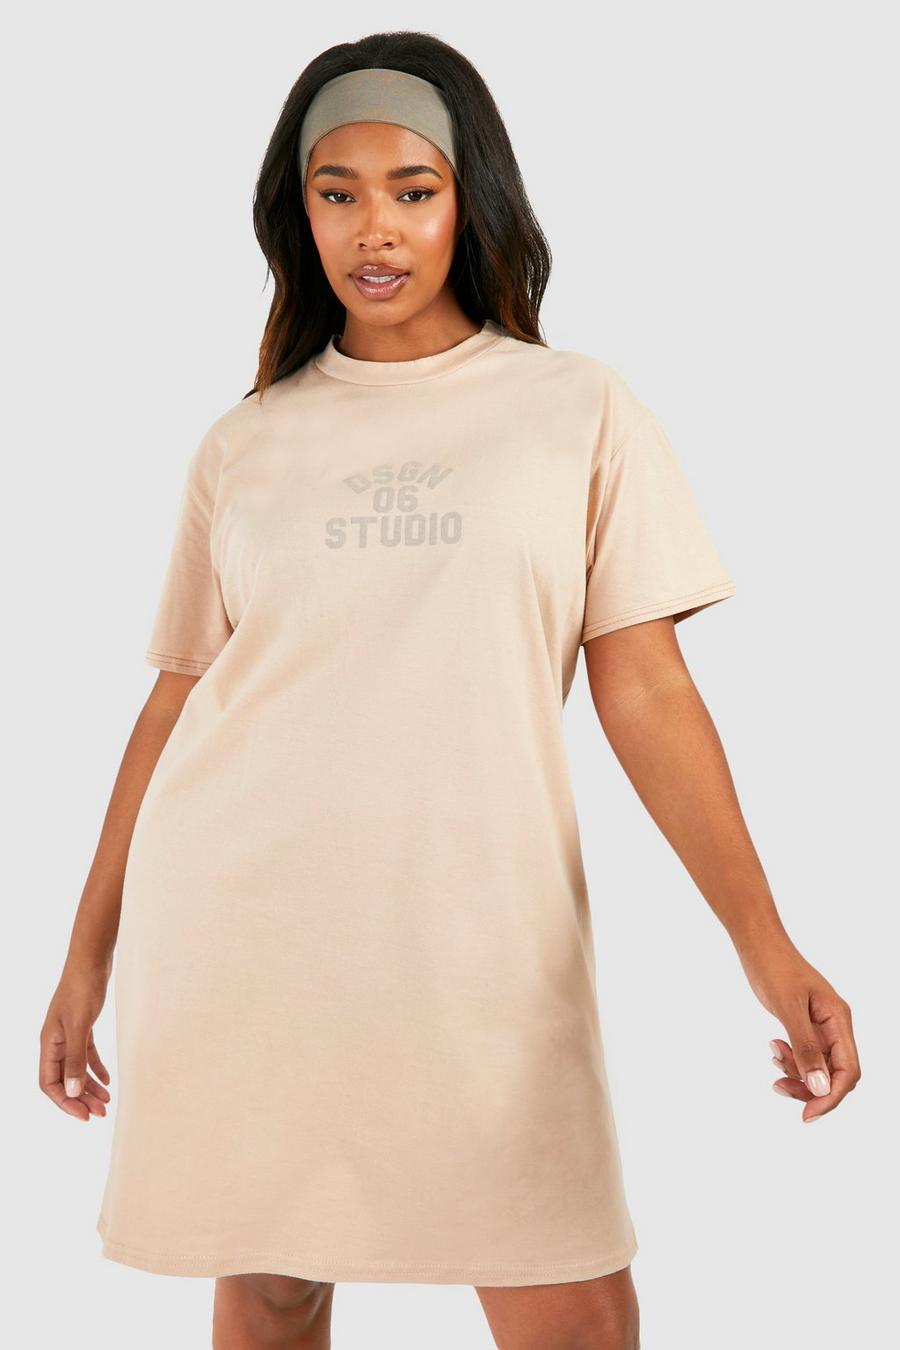 Vestido camiseta Plus con estampado Dsgn Studio, Stone